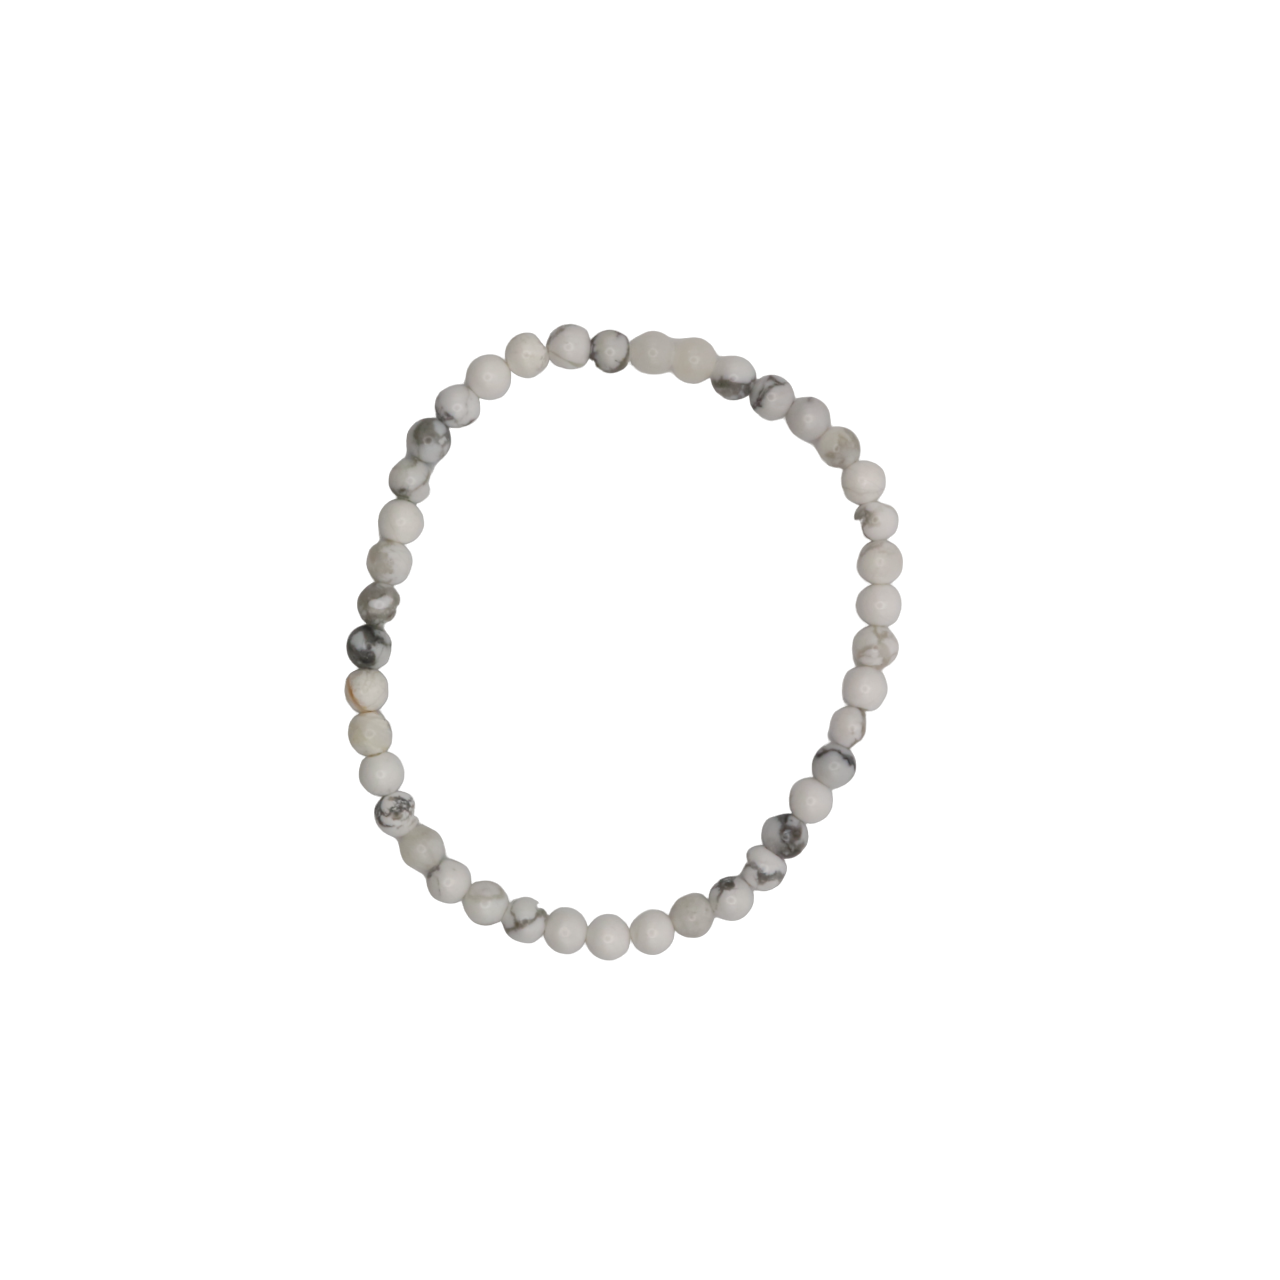 4mm howlite crystal bead bracelet